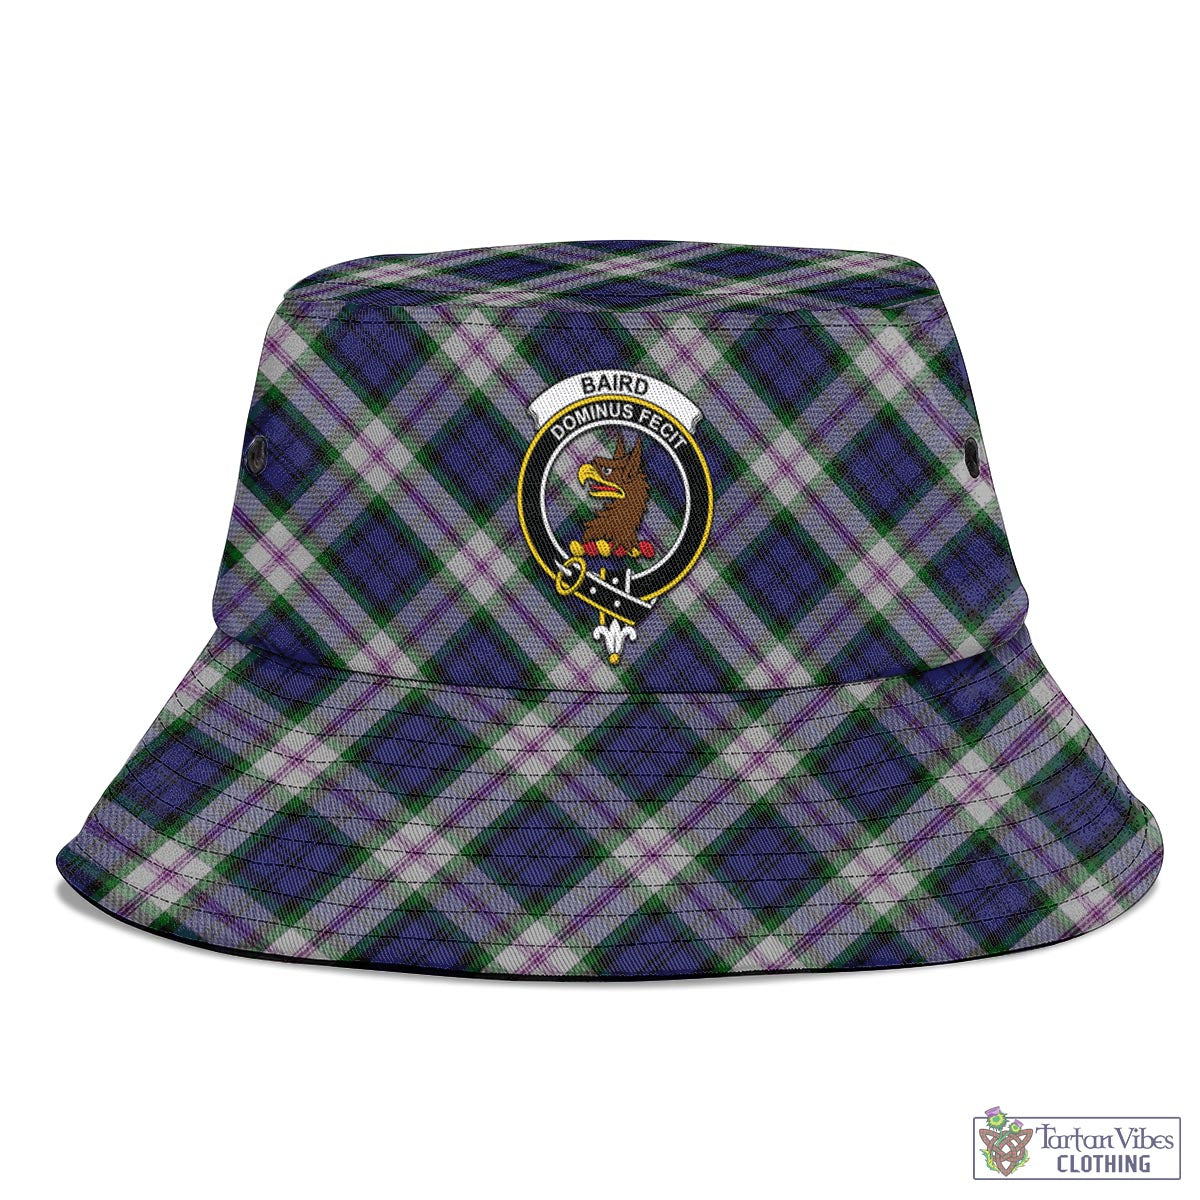 Tartan Vibes Clothing Baird Dress Tartan Bucket Hat with Family Crest